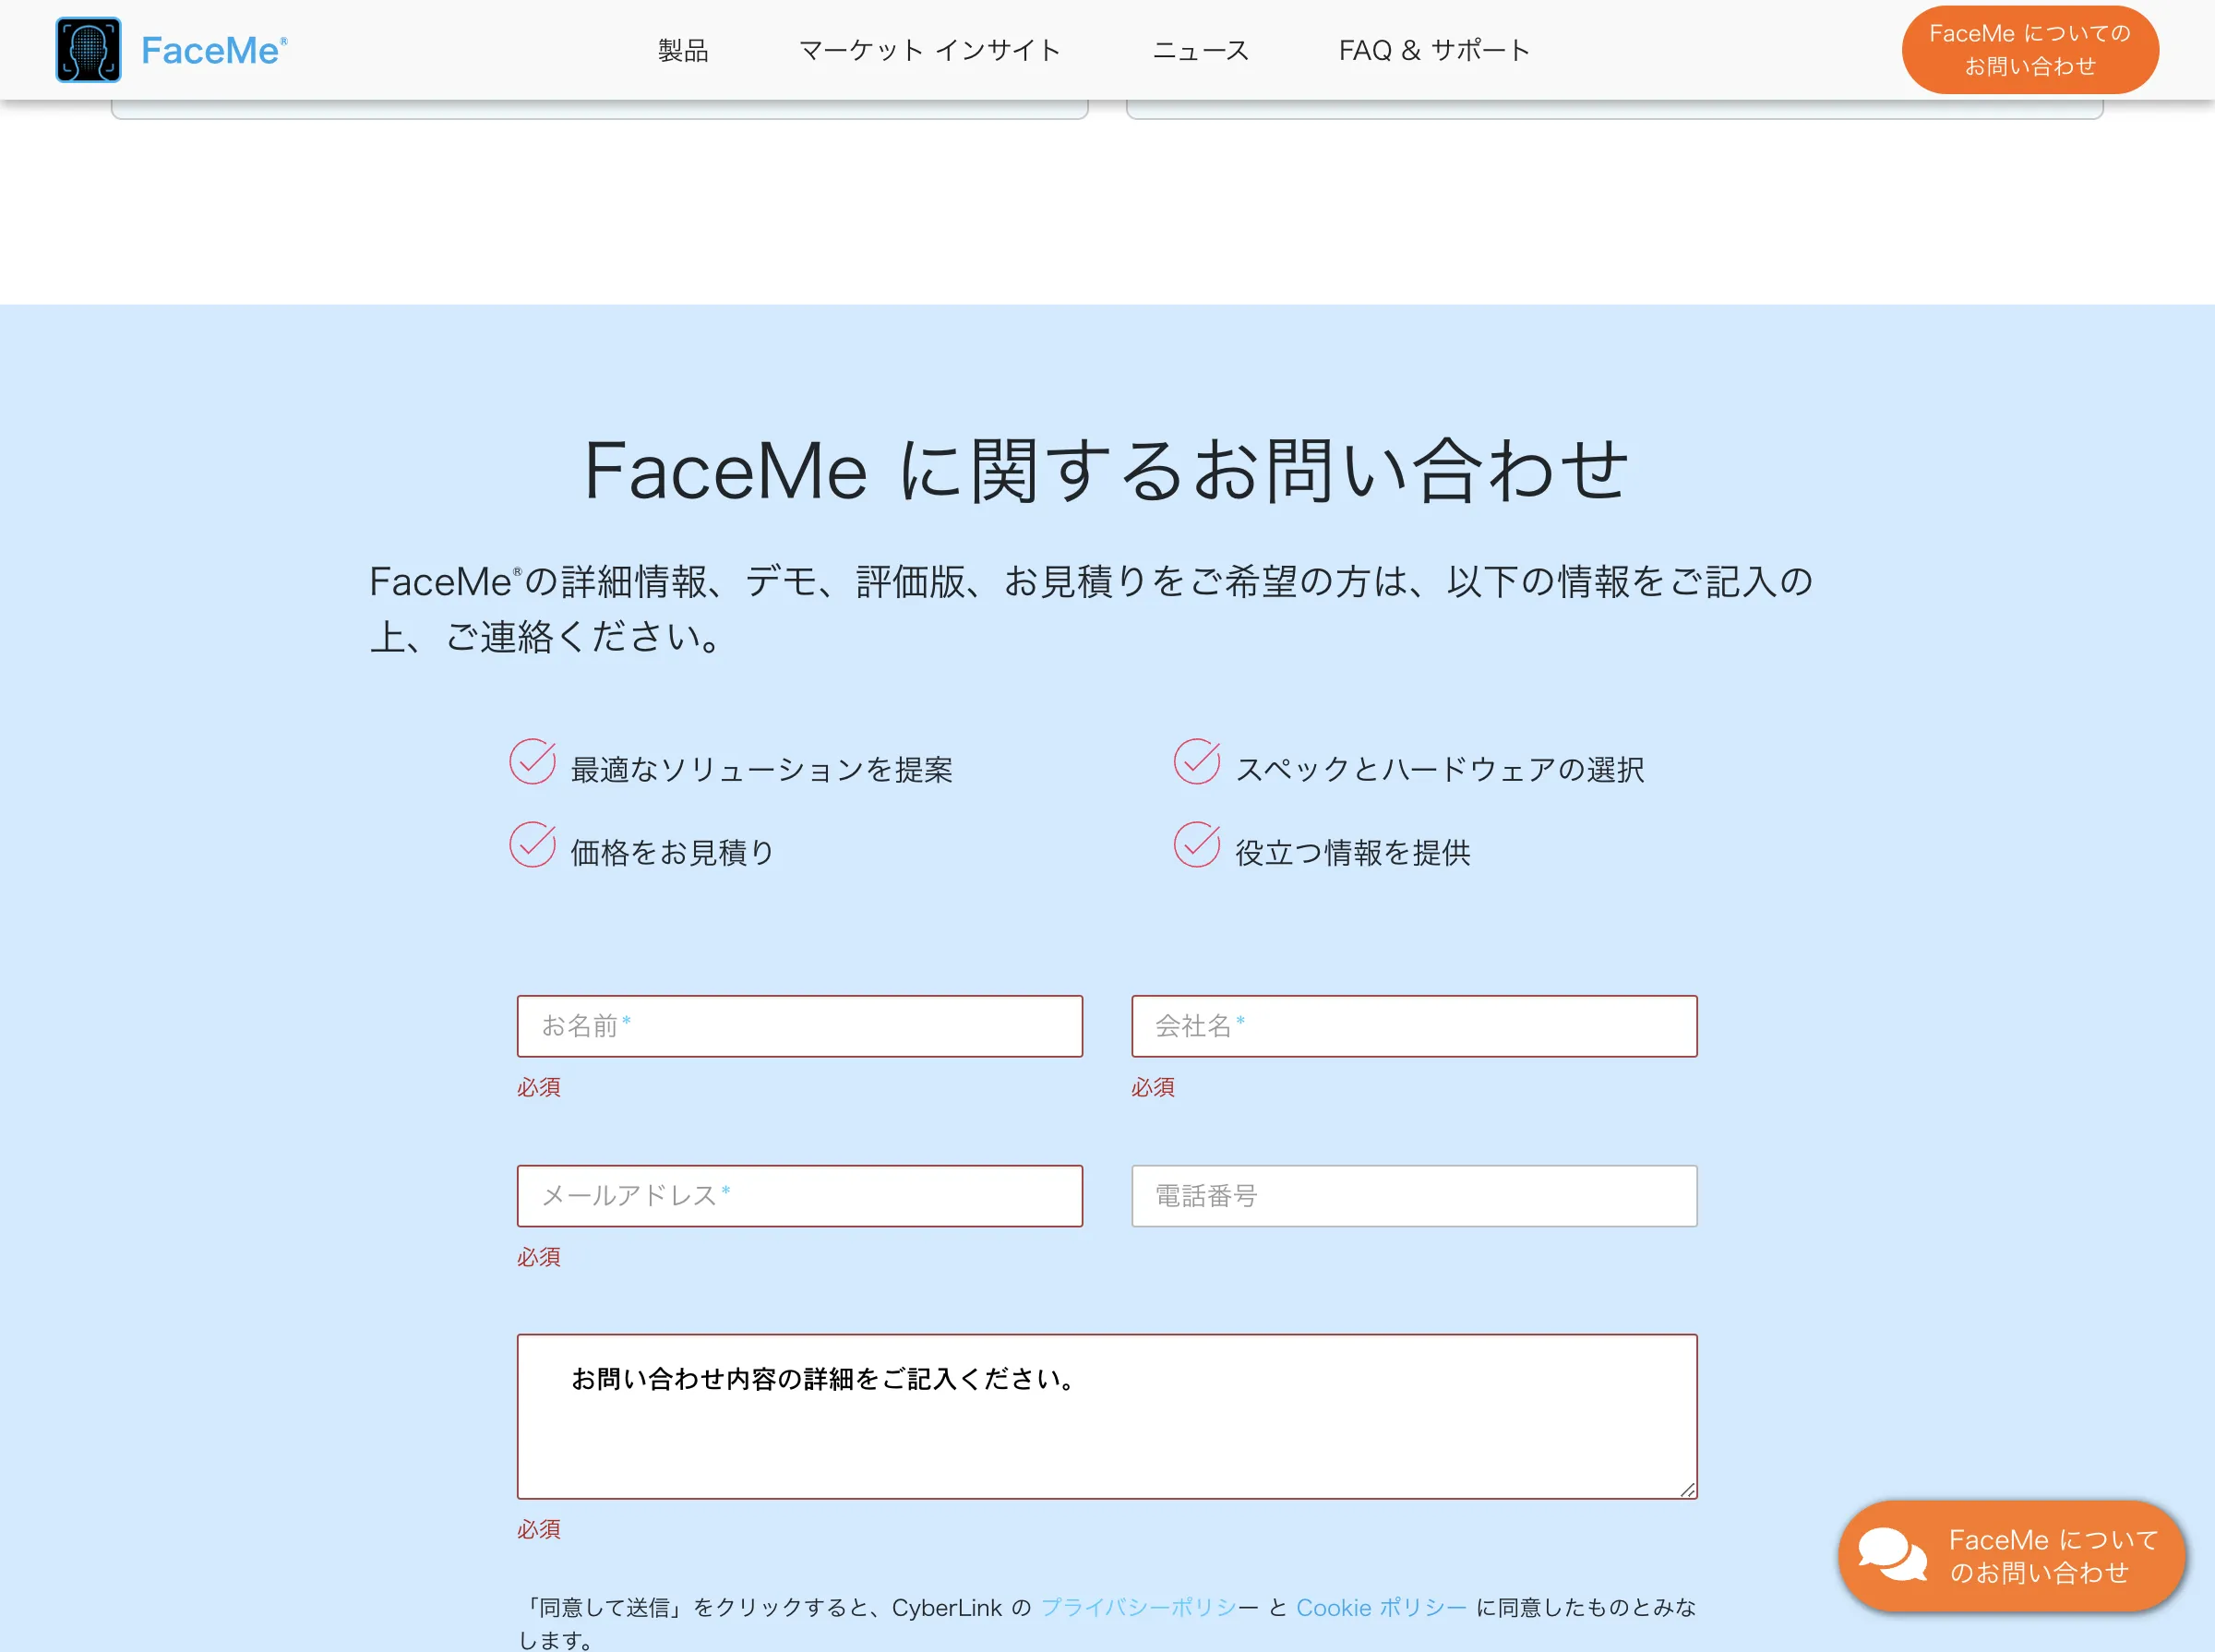 FaceMe®(サイバーリンク株式会社)